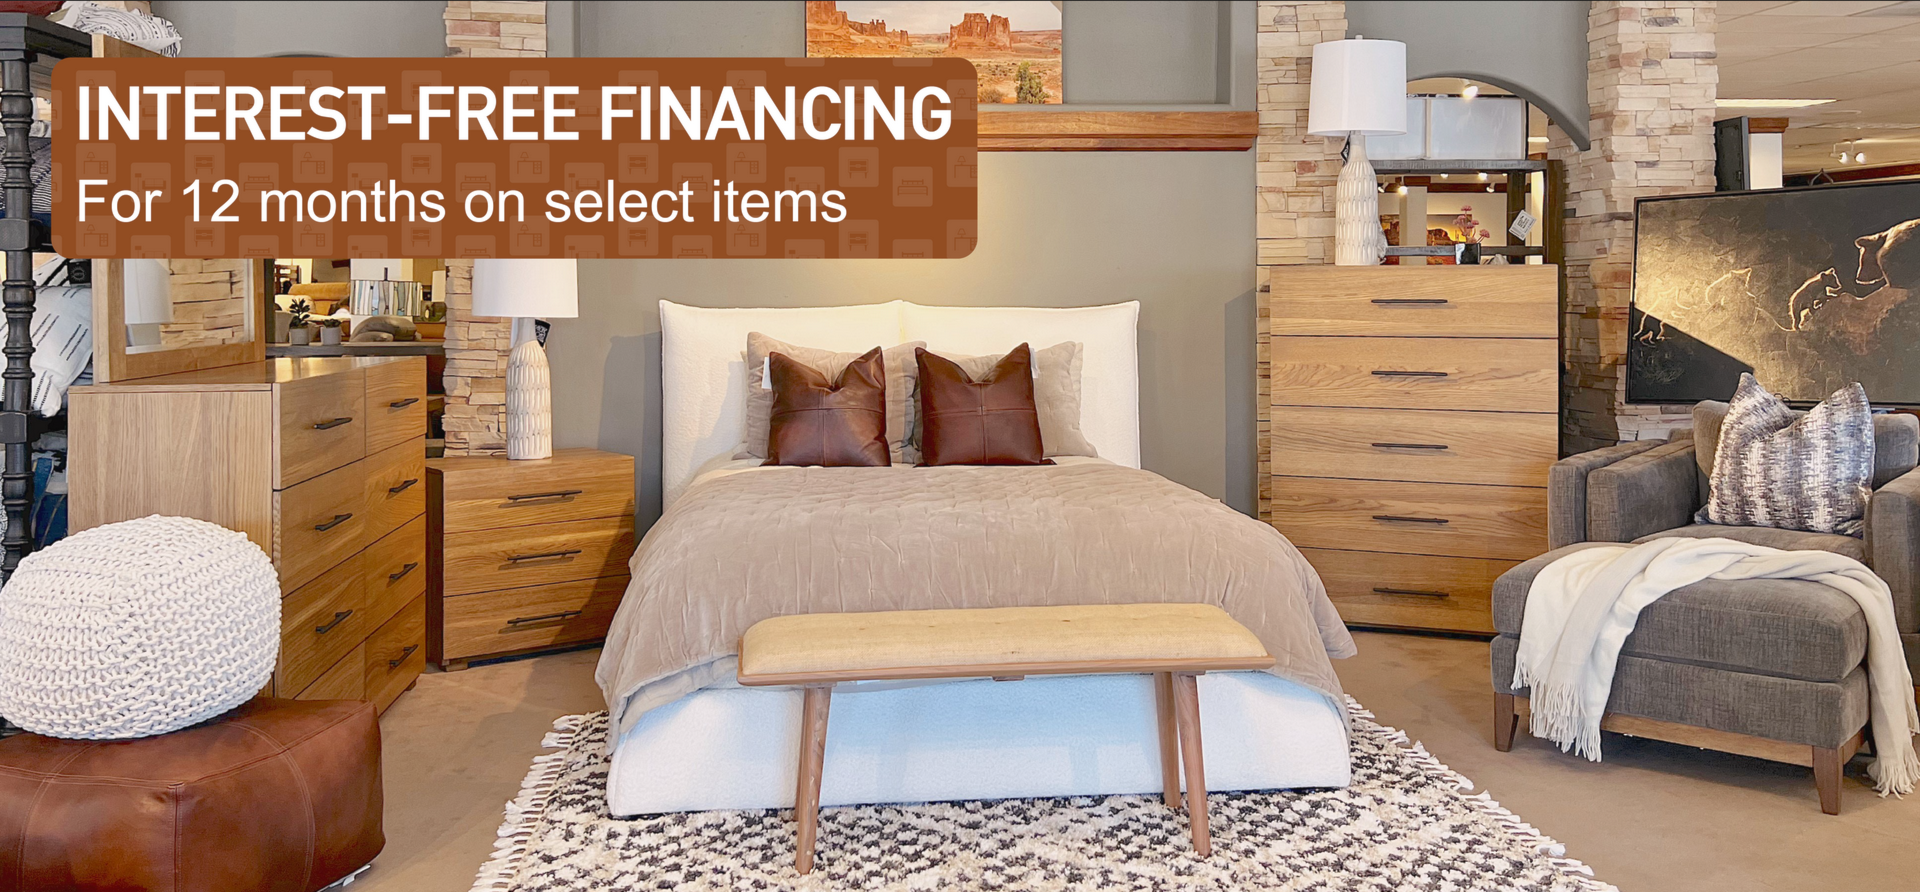 Home Furnishings Direct interest free financing